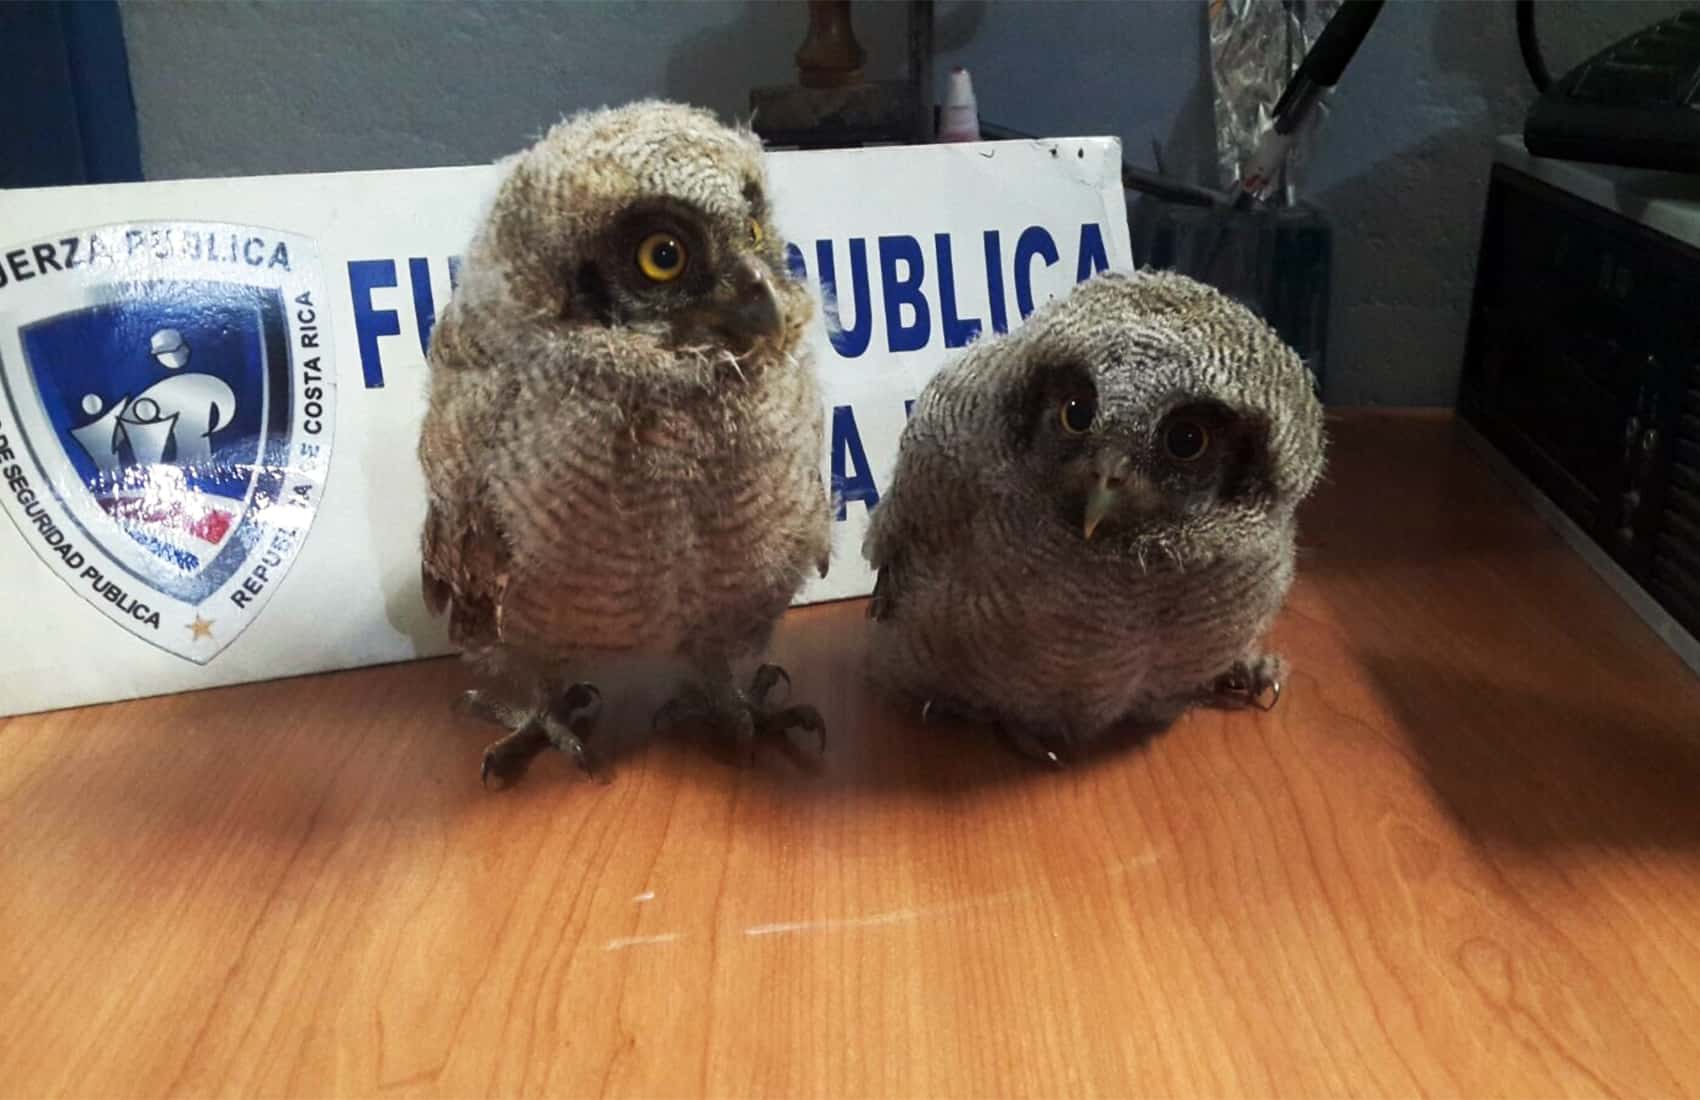 owls; Costa Rica wildlife trafficking